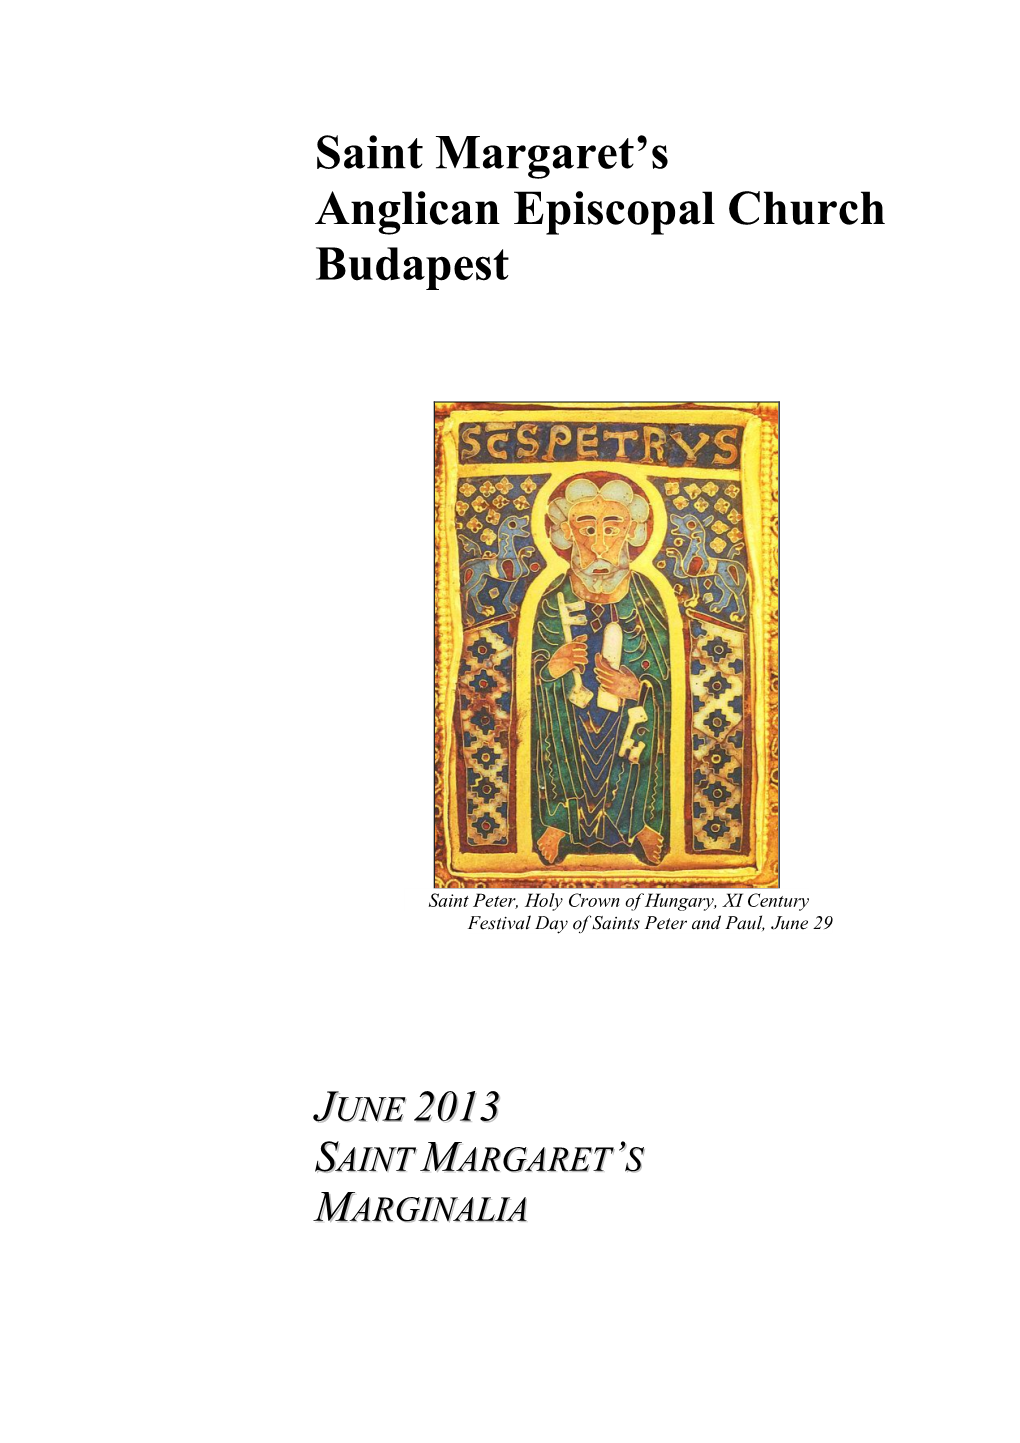 Saint Margaret's Anglican Episcopal Church Budapest